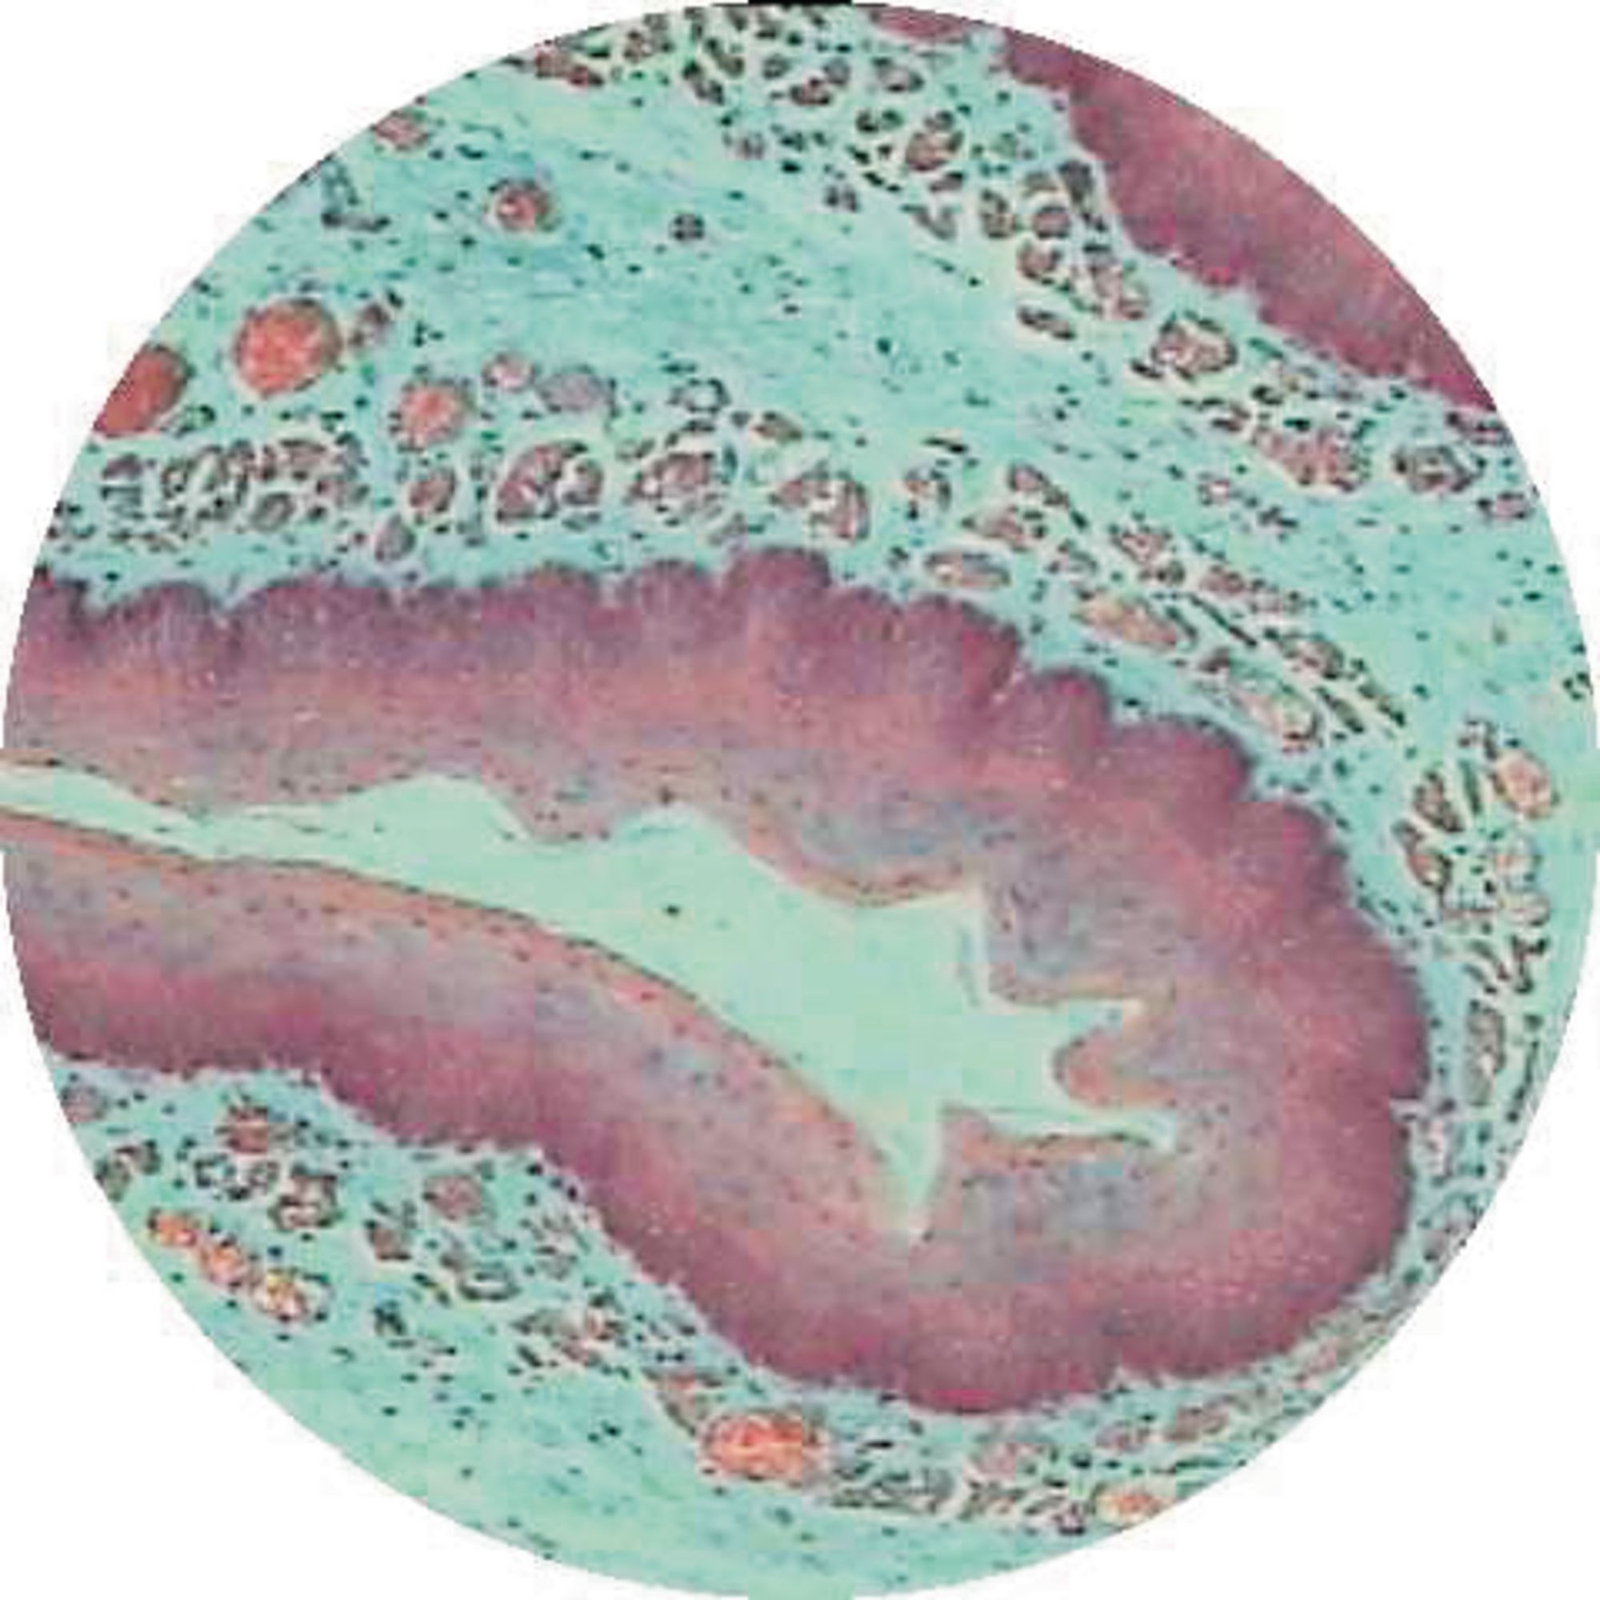 Stomach To Show Mucus Cells Parietal